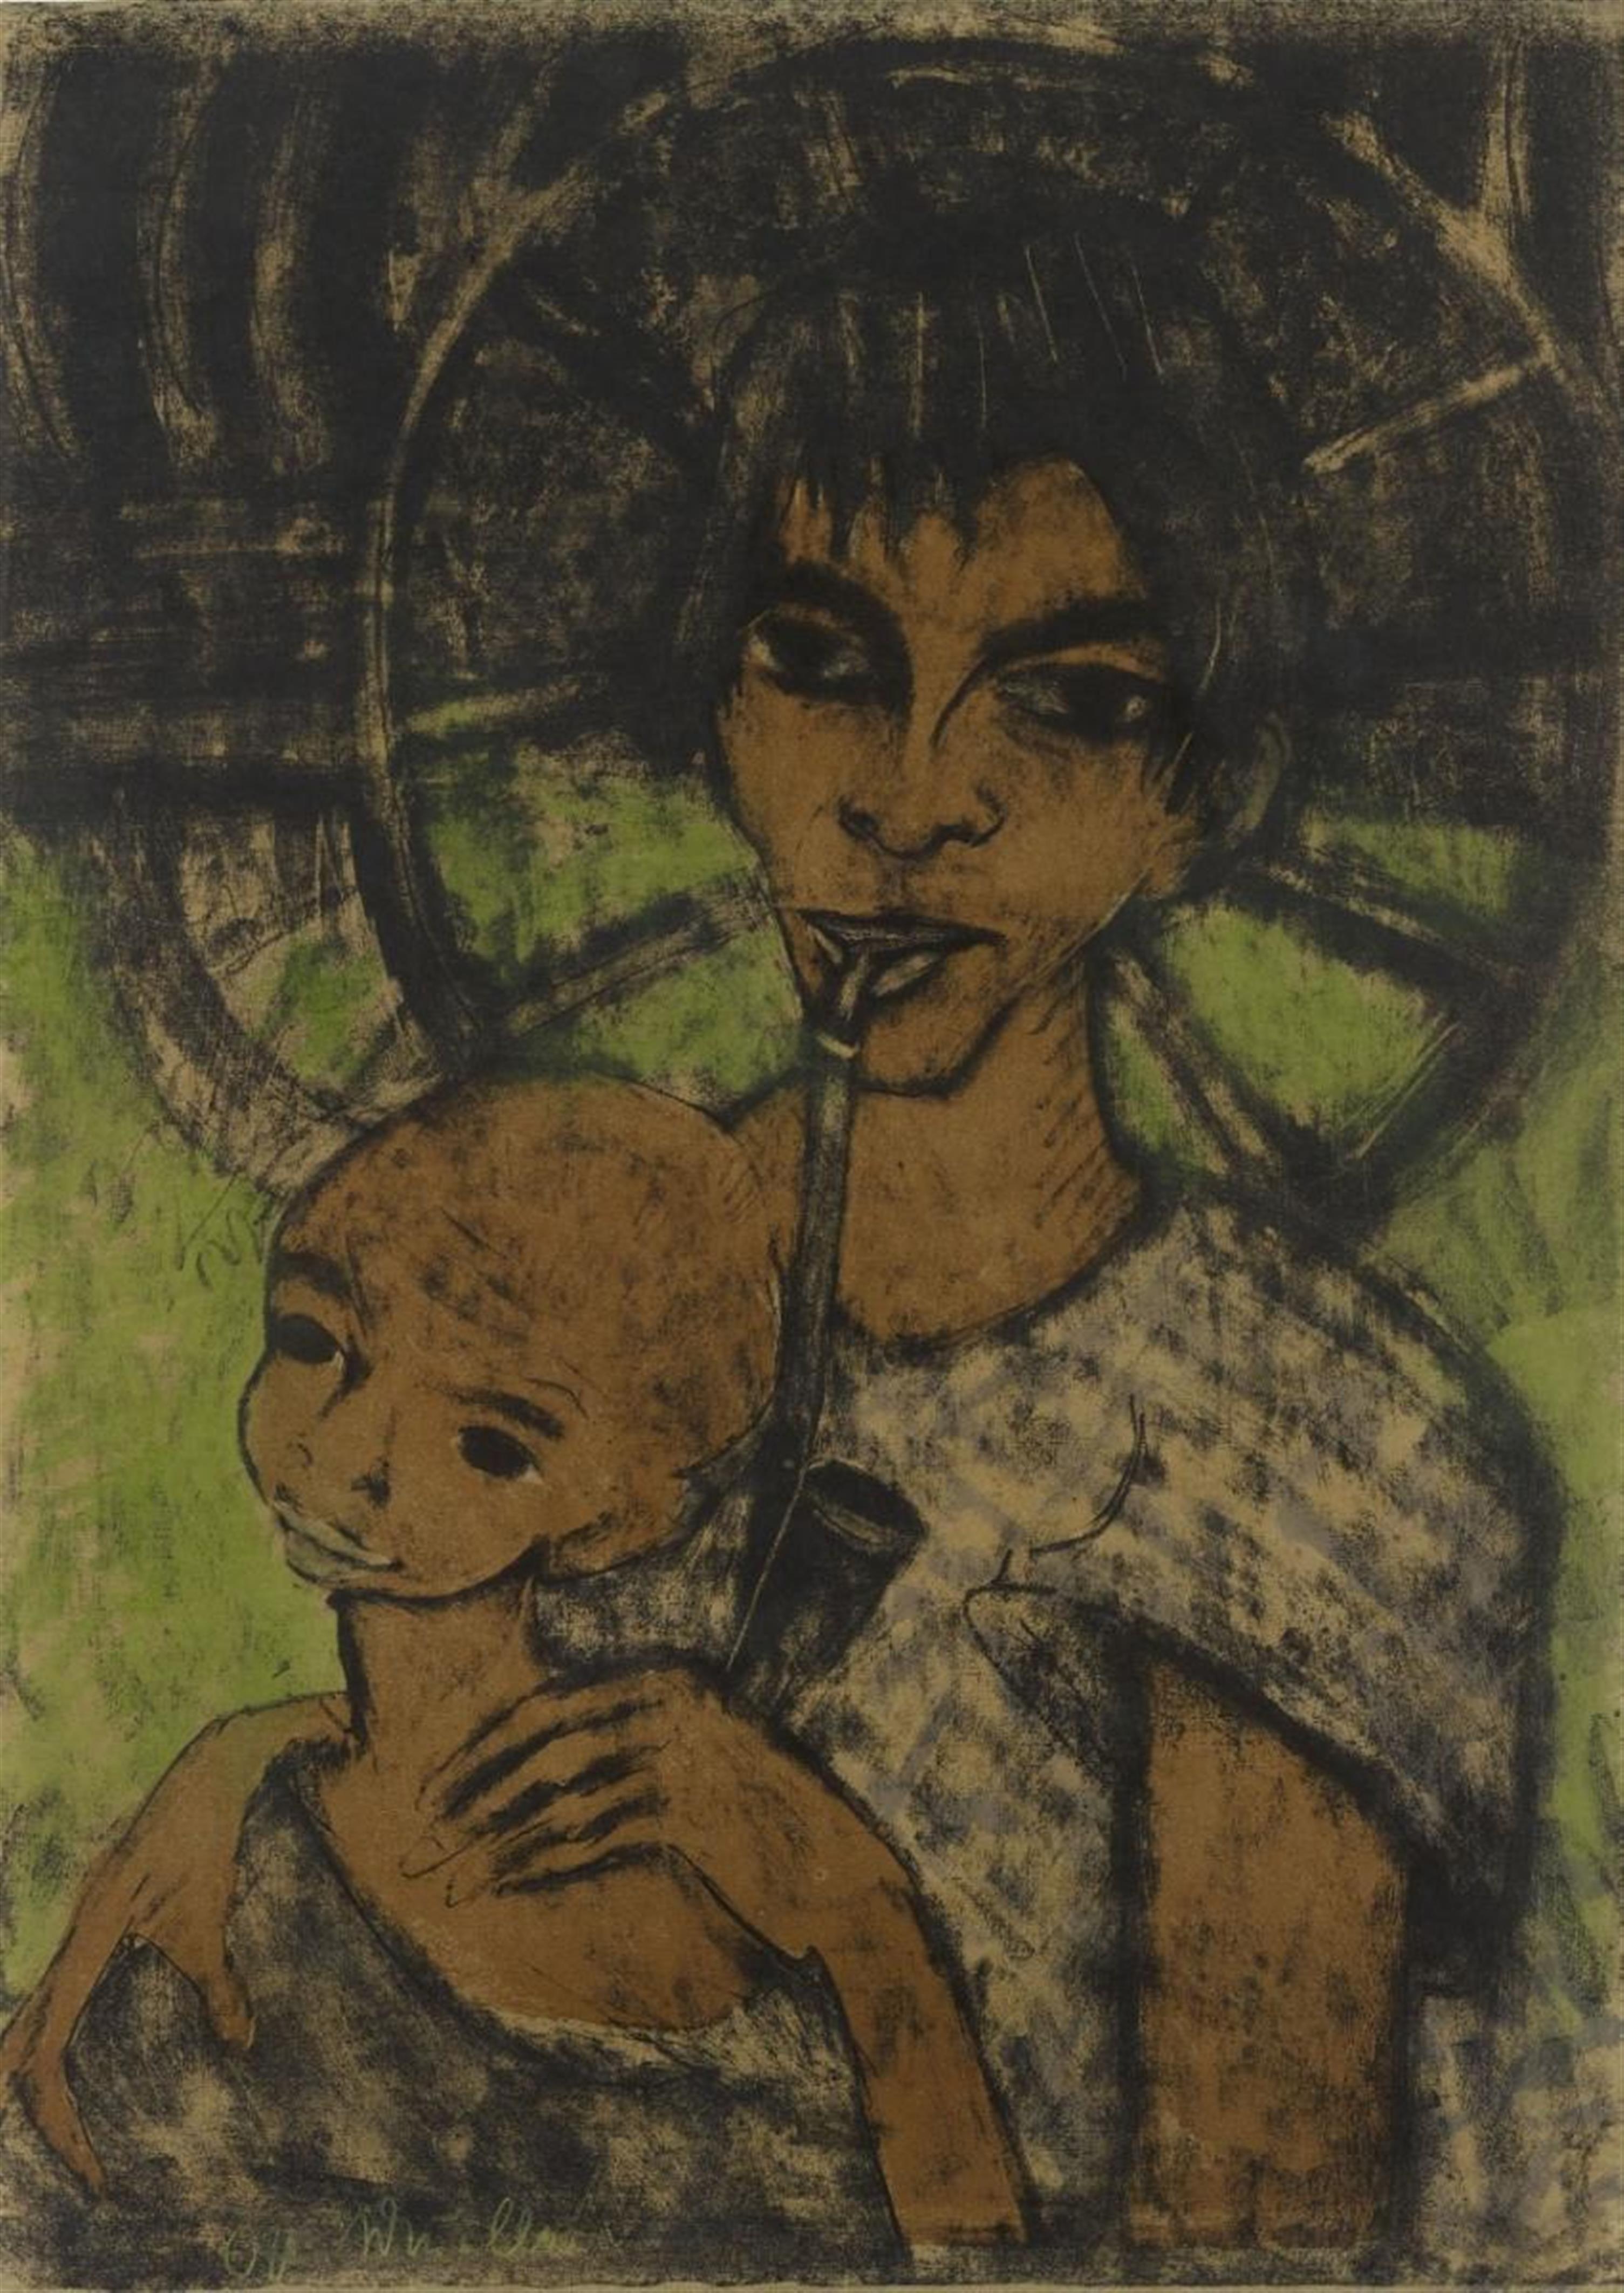 Otto Mueller - Zigeunermadonna: Zigeunerin mit Kind vorm Wagenrad (Gipsy Madonna: Gipsy Woman with Child in front of Cart Wheel) - image-1